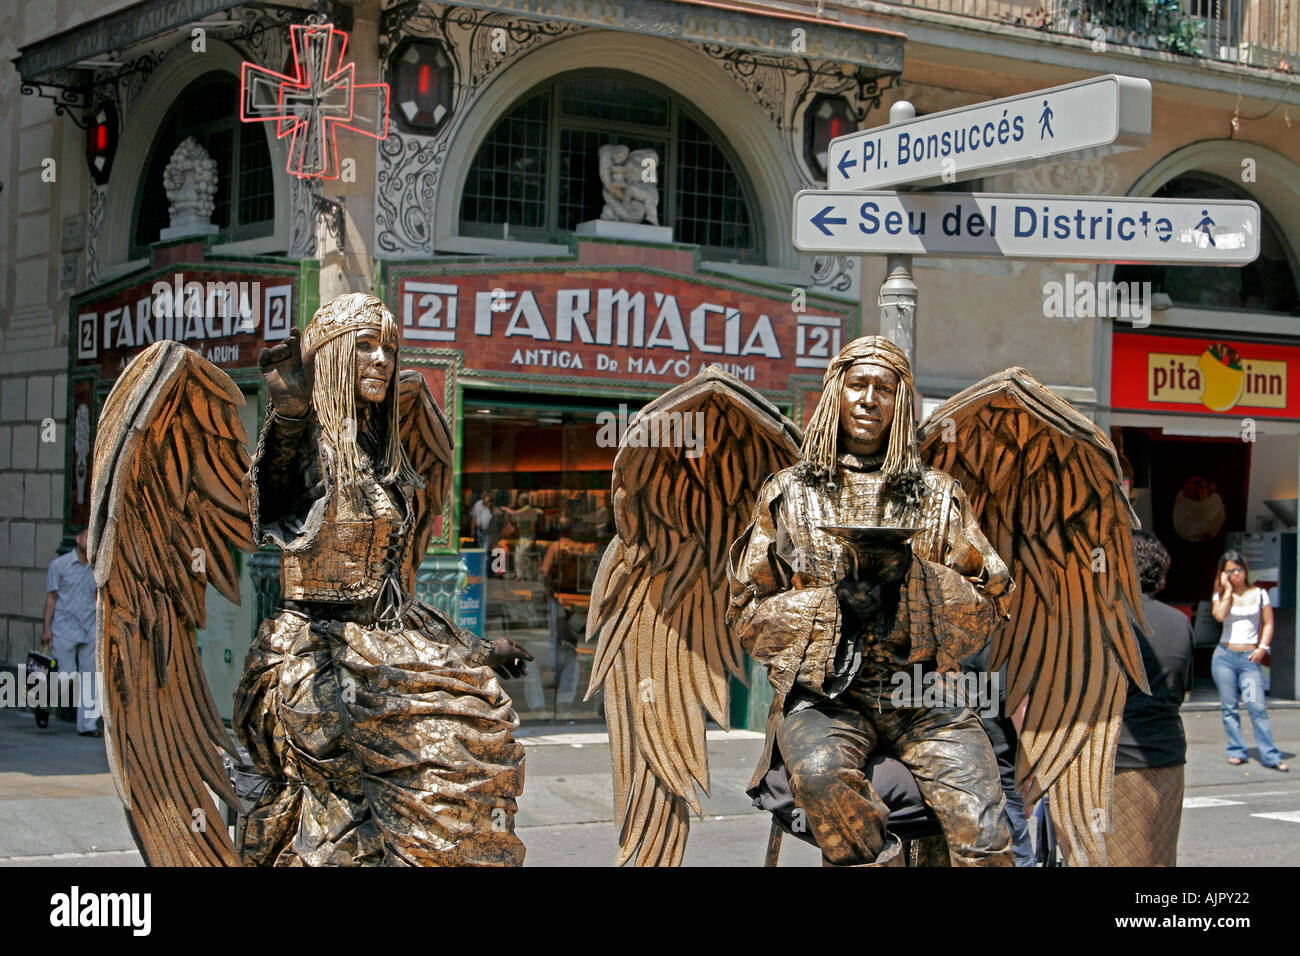 spain Barcelona ramblas street artists angel costums Stock Photo